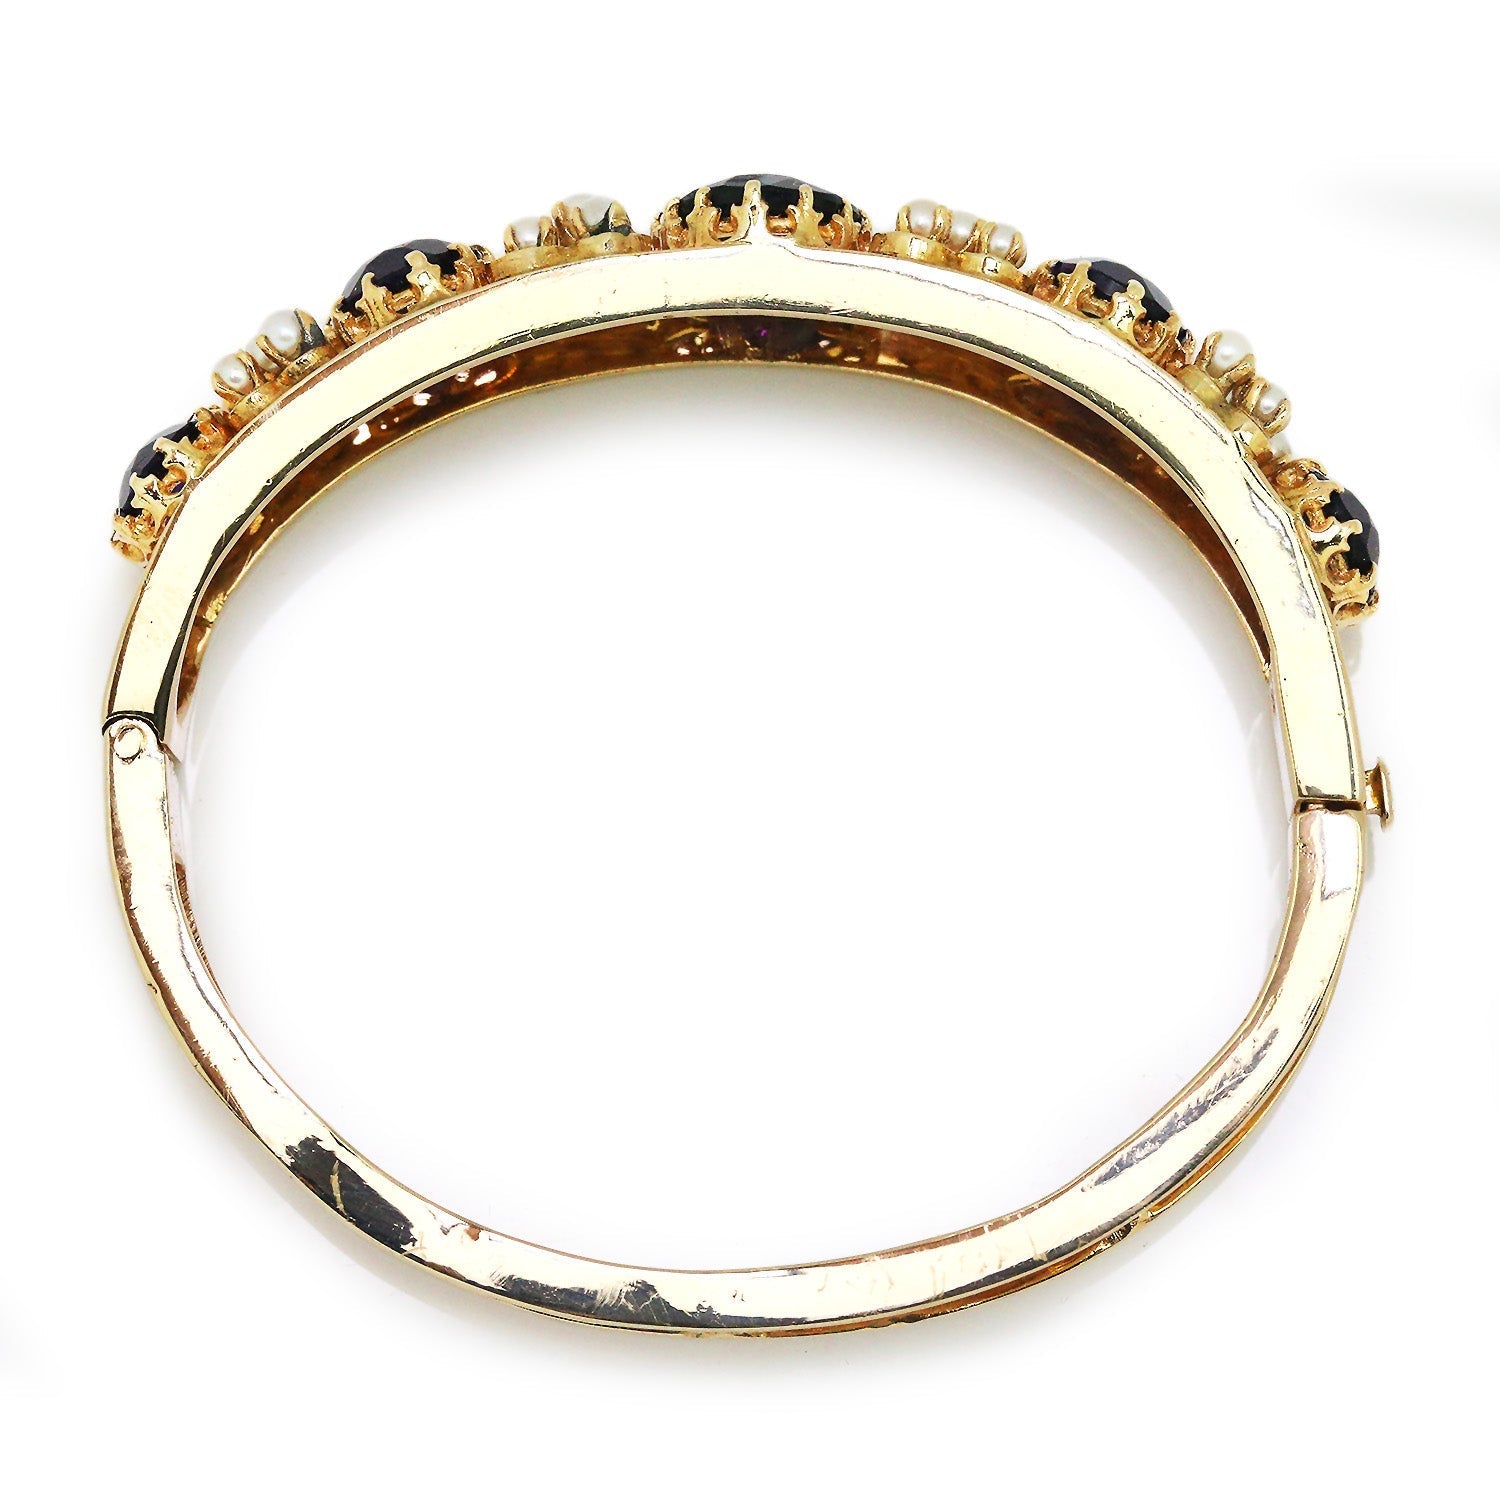 Monogram Bangle Bracelet - Classic Oval Bead Border Gold Plated